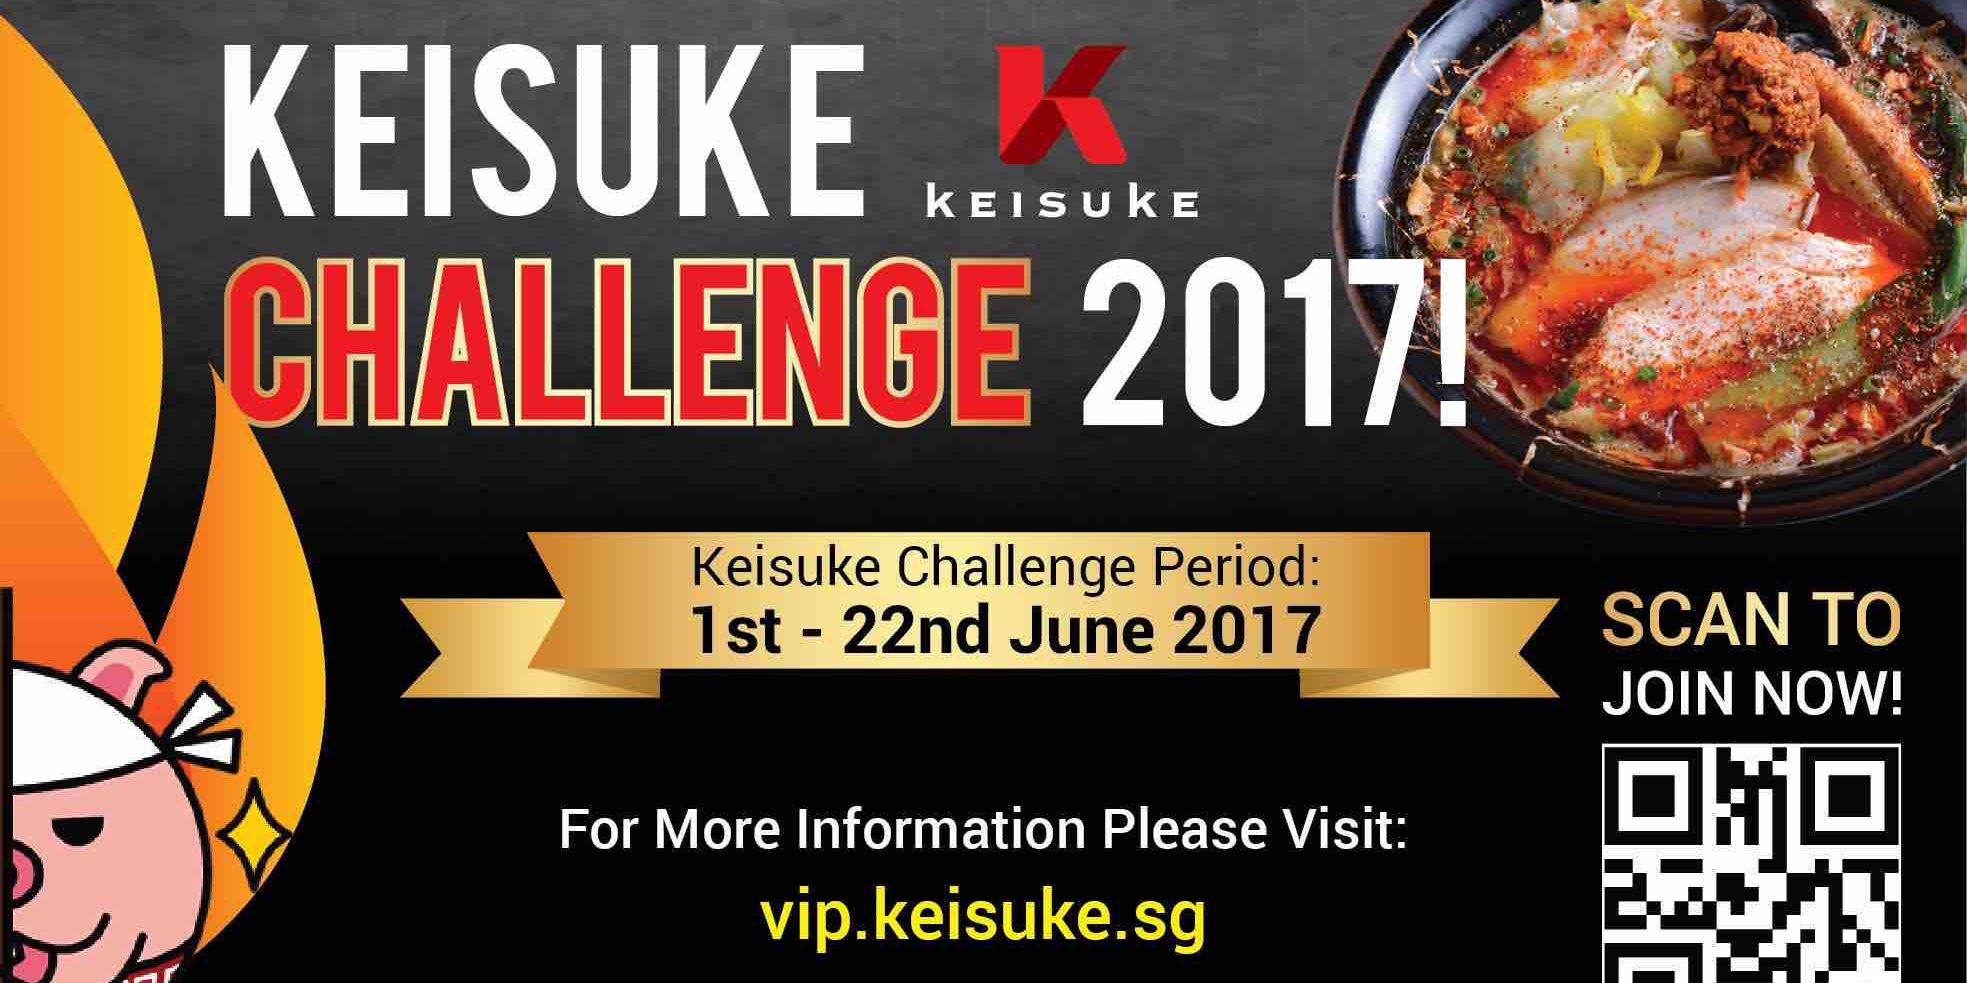 Ramen Keisuke Challenge 2017 Singapore Scan QR Code To Join Contest 1-22 Jun 2017